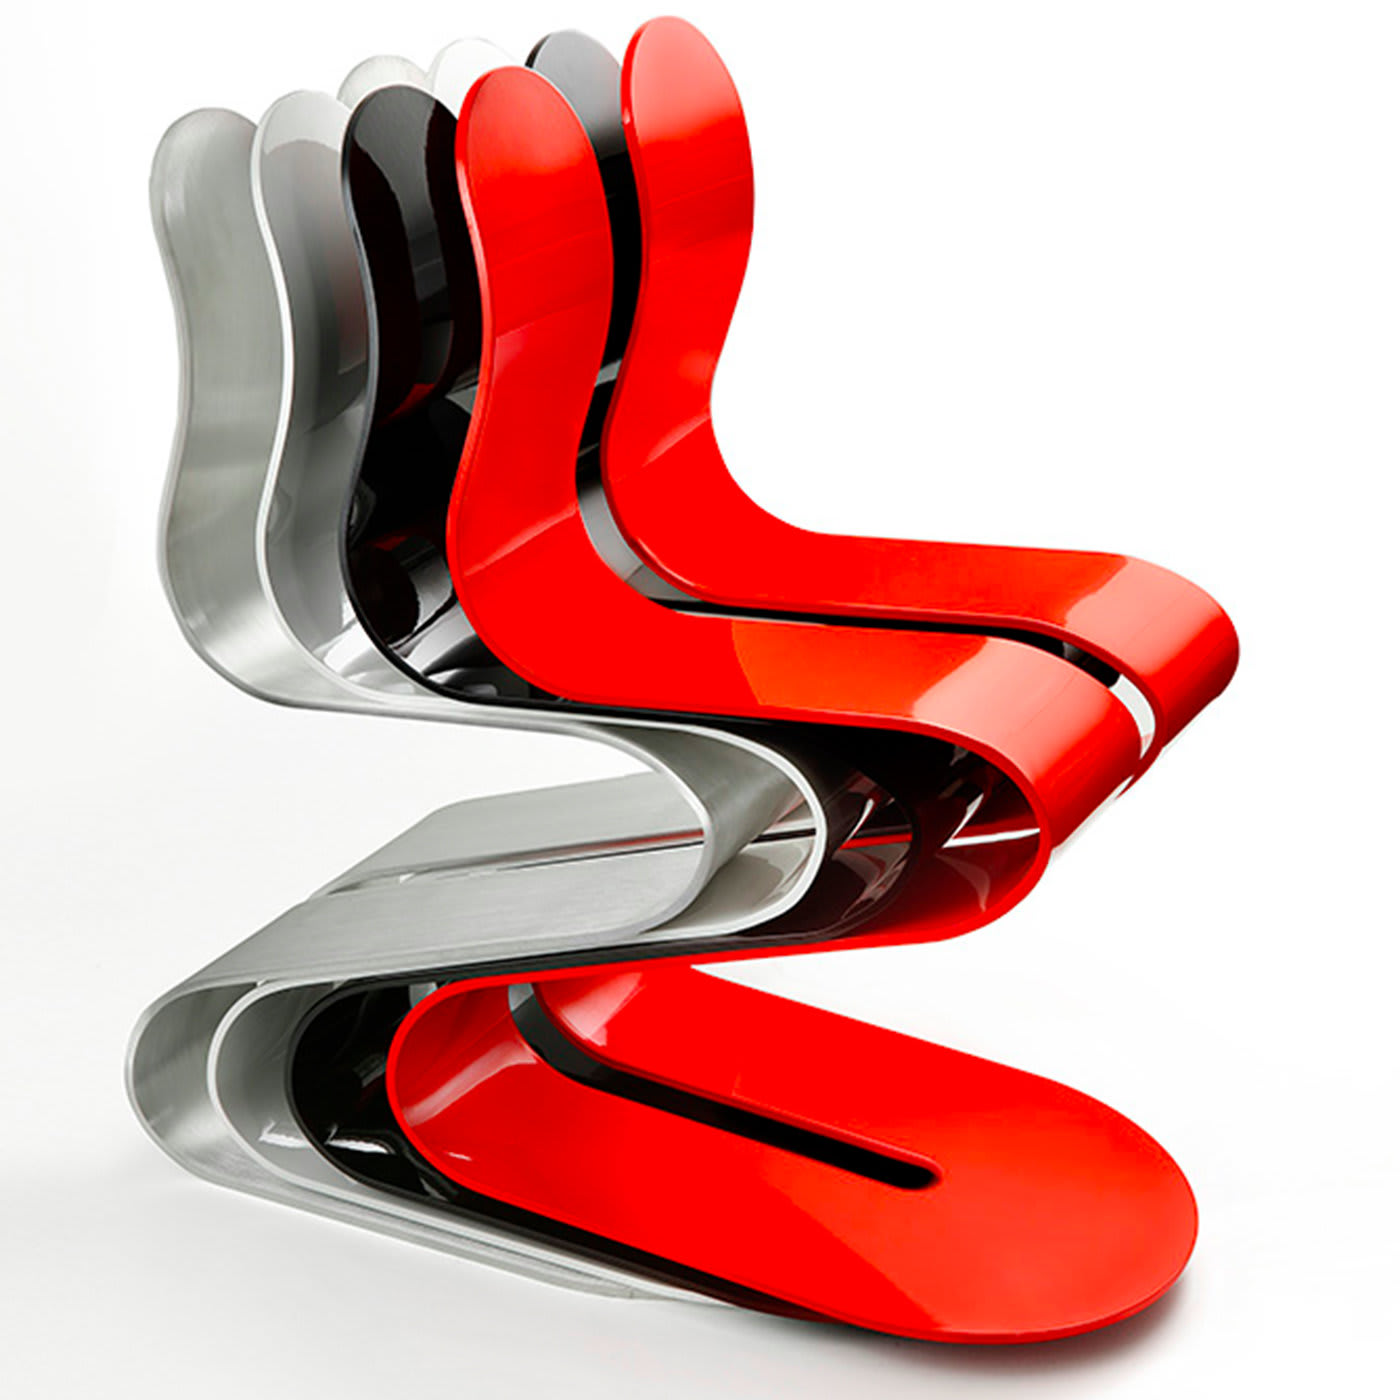 Fluid Ribbon Black Chair by Michael D'Amato - Lamberti Design